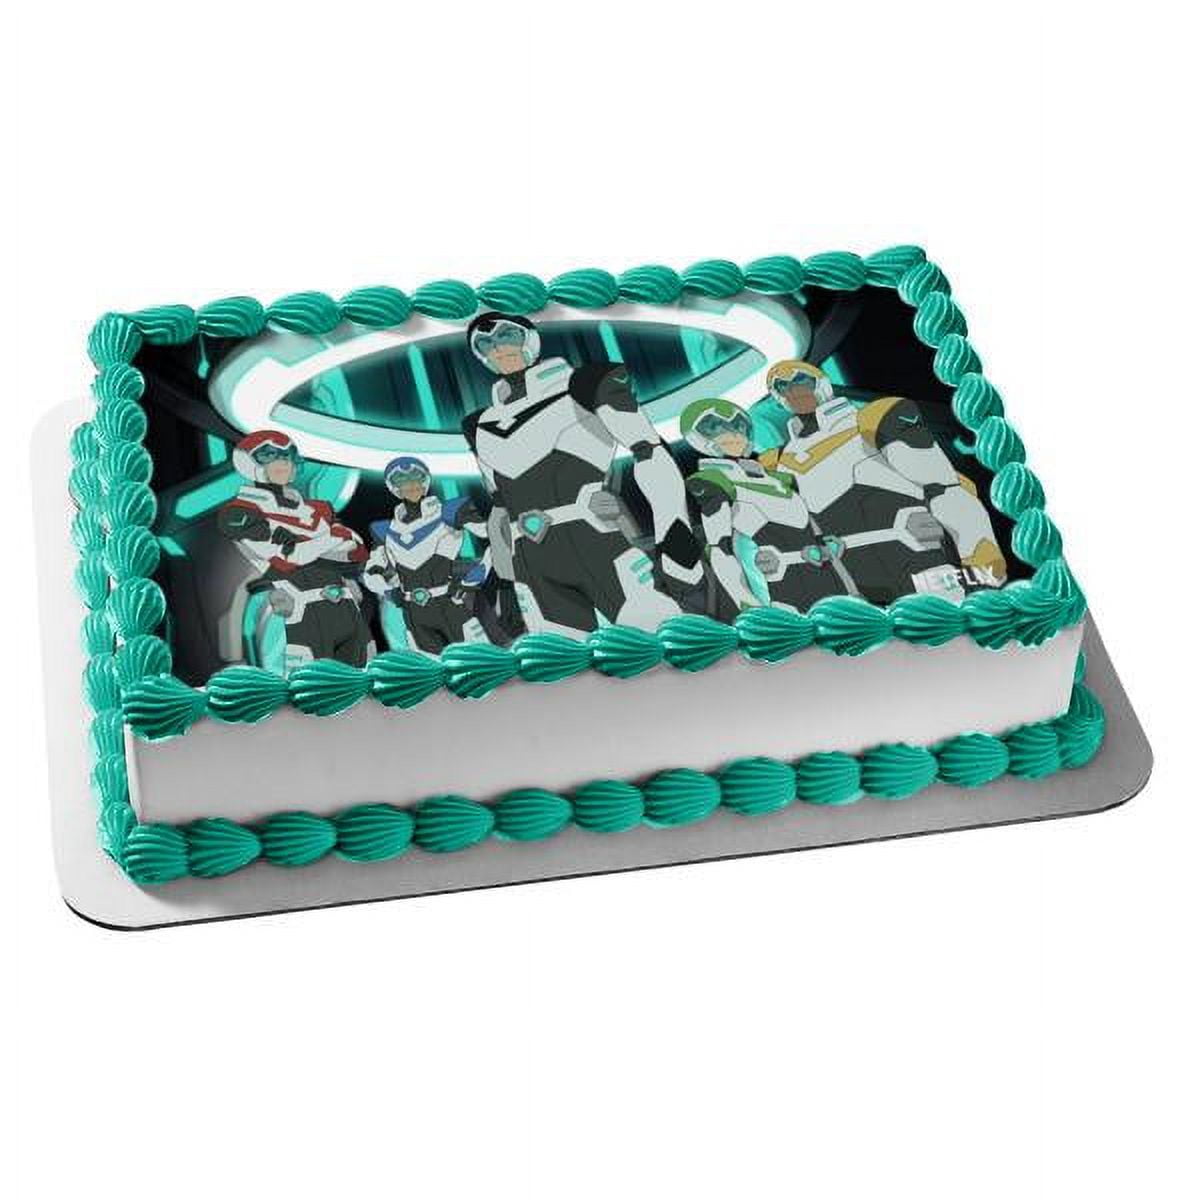 NEW Ben 10 edible cake image cake topper frosting sheet - Walmart.com